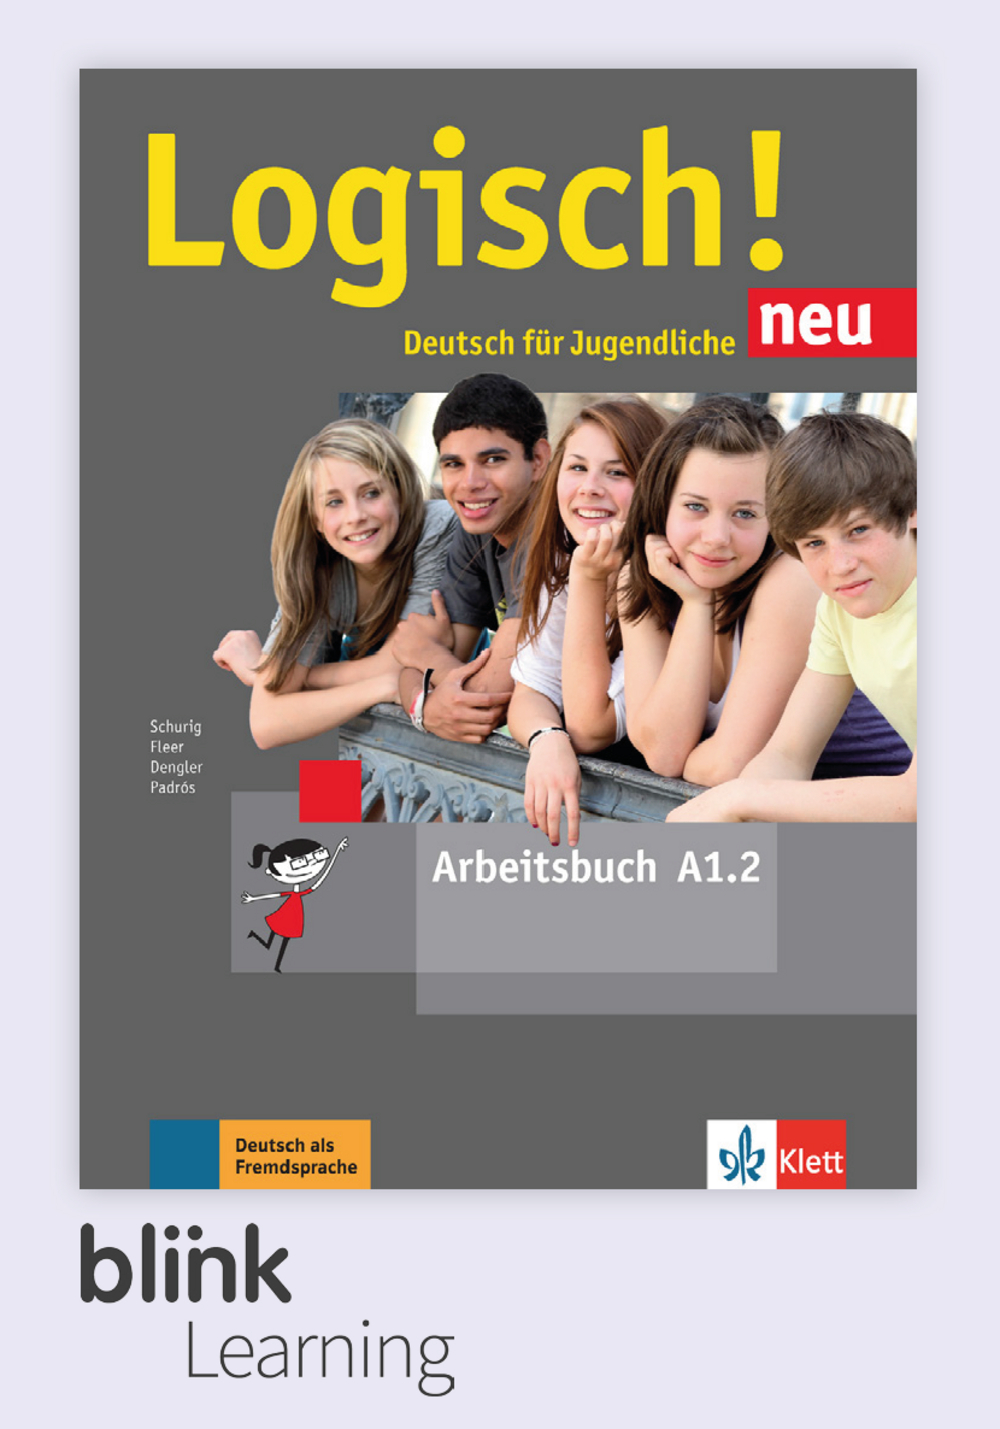 Logisch! NEU A1.2 Digital Arbeitsbuch für Unterrichtende / Цифровая рабочая тетрадь для учителя